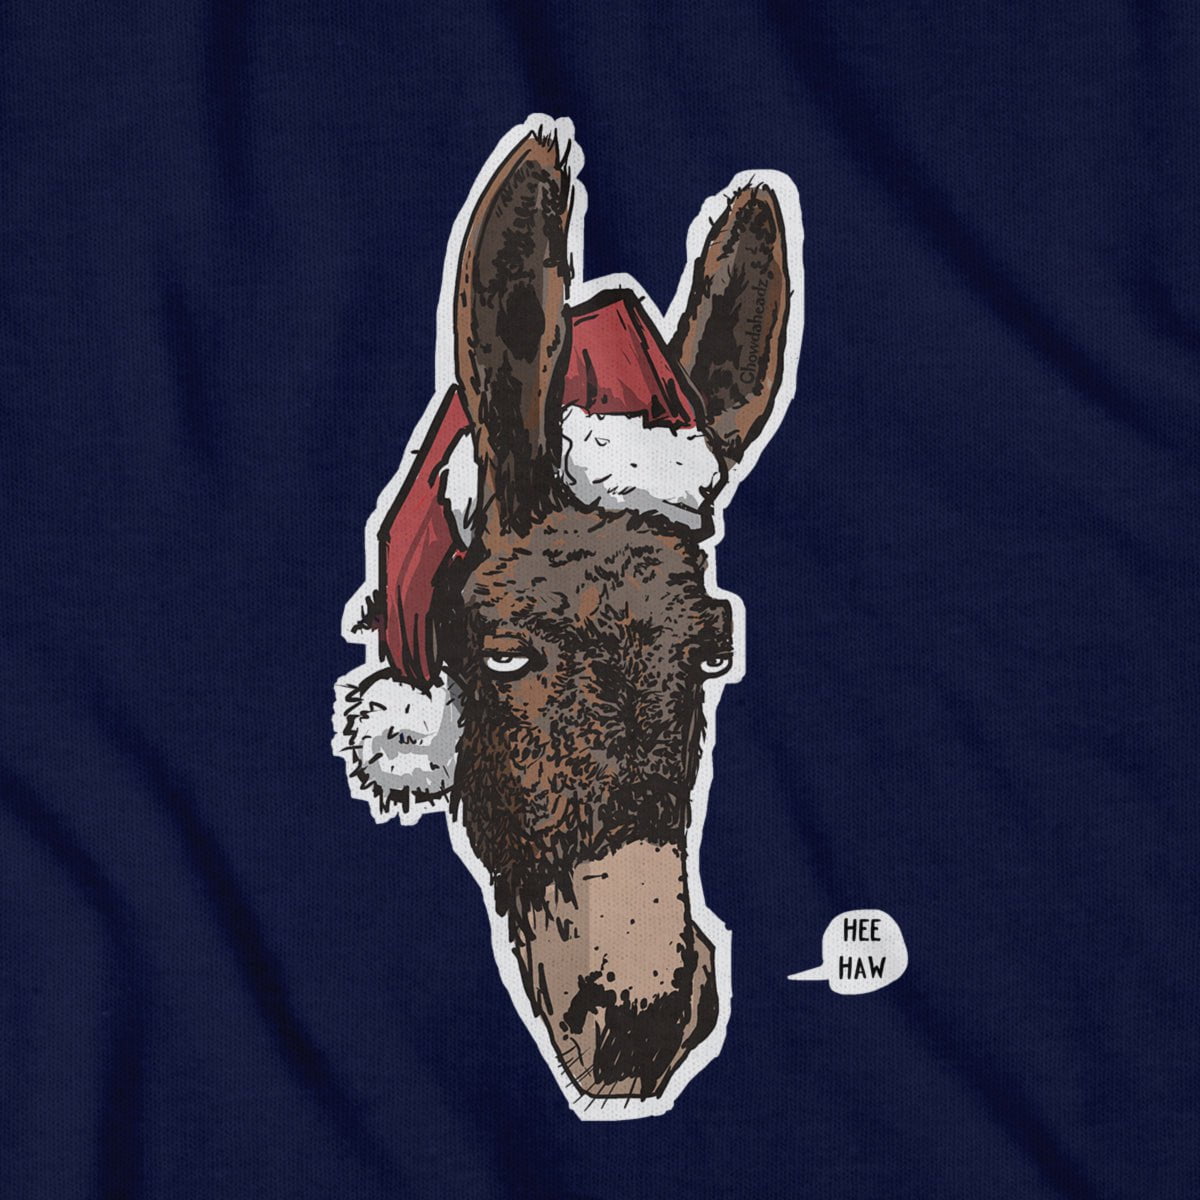 Holiday Donkey T-Shirt - Chowdaheadz